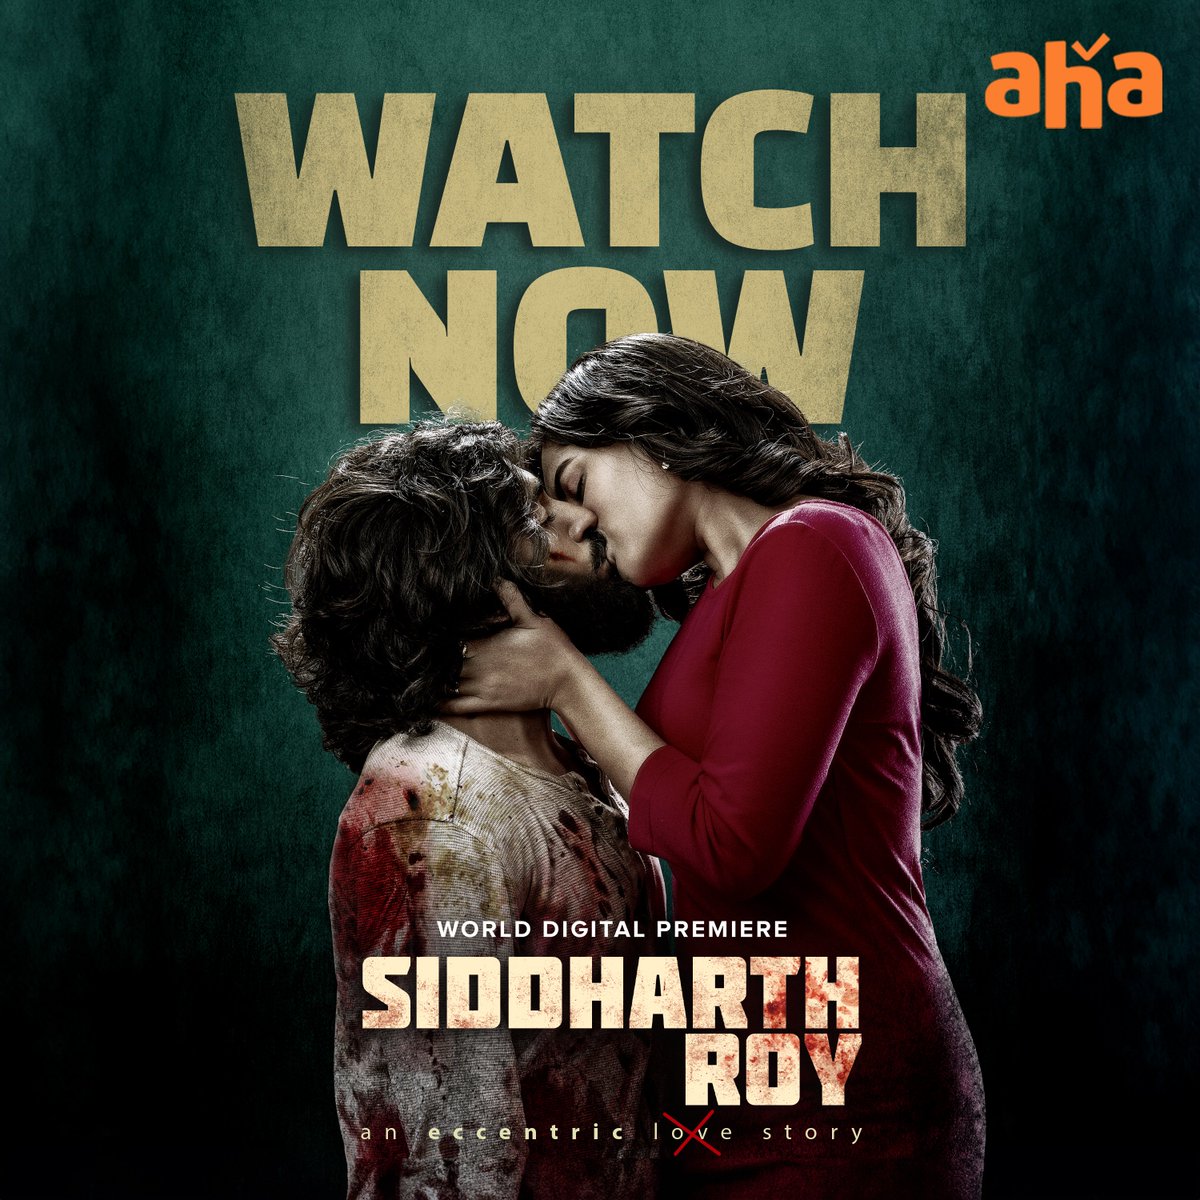 #SiddharthRoy is now streaming on Aha.